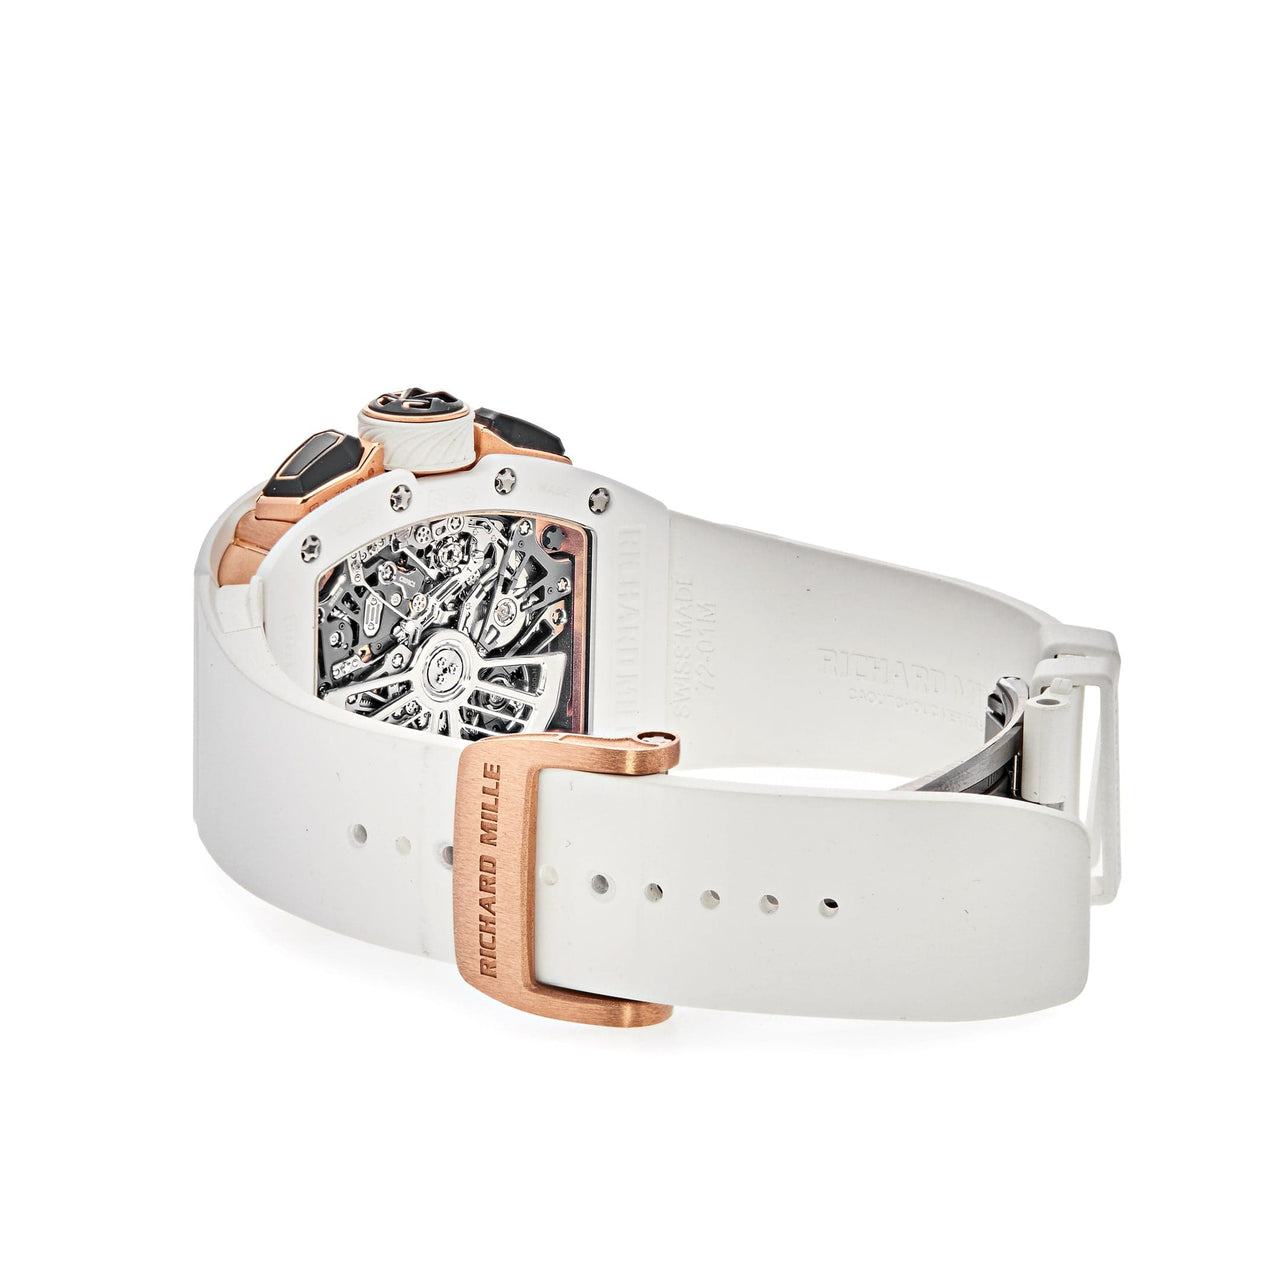 Luxury Watch Richard Mille Lifestyle In-House Chronograph White Ceramic RM72-01 Wrist Aficionado